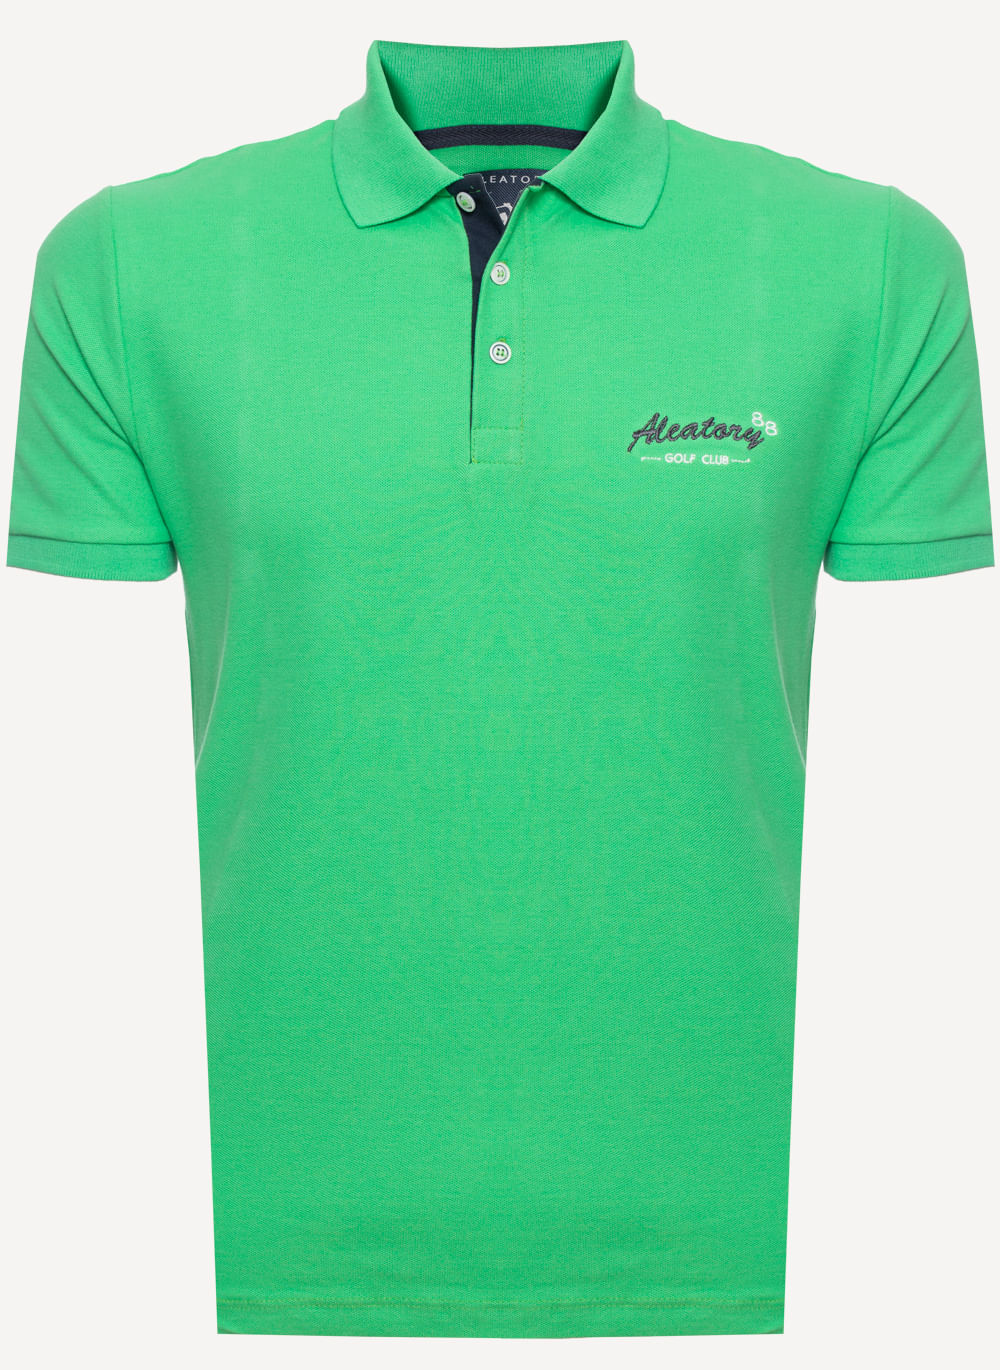 https---s3-sa-east-1.amazonaws.com-softvar-Zetop-51956-img_original-camisa-polo-masculina-aleatory-still-lisa-piquet-golf-club-verde-1-